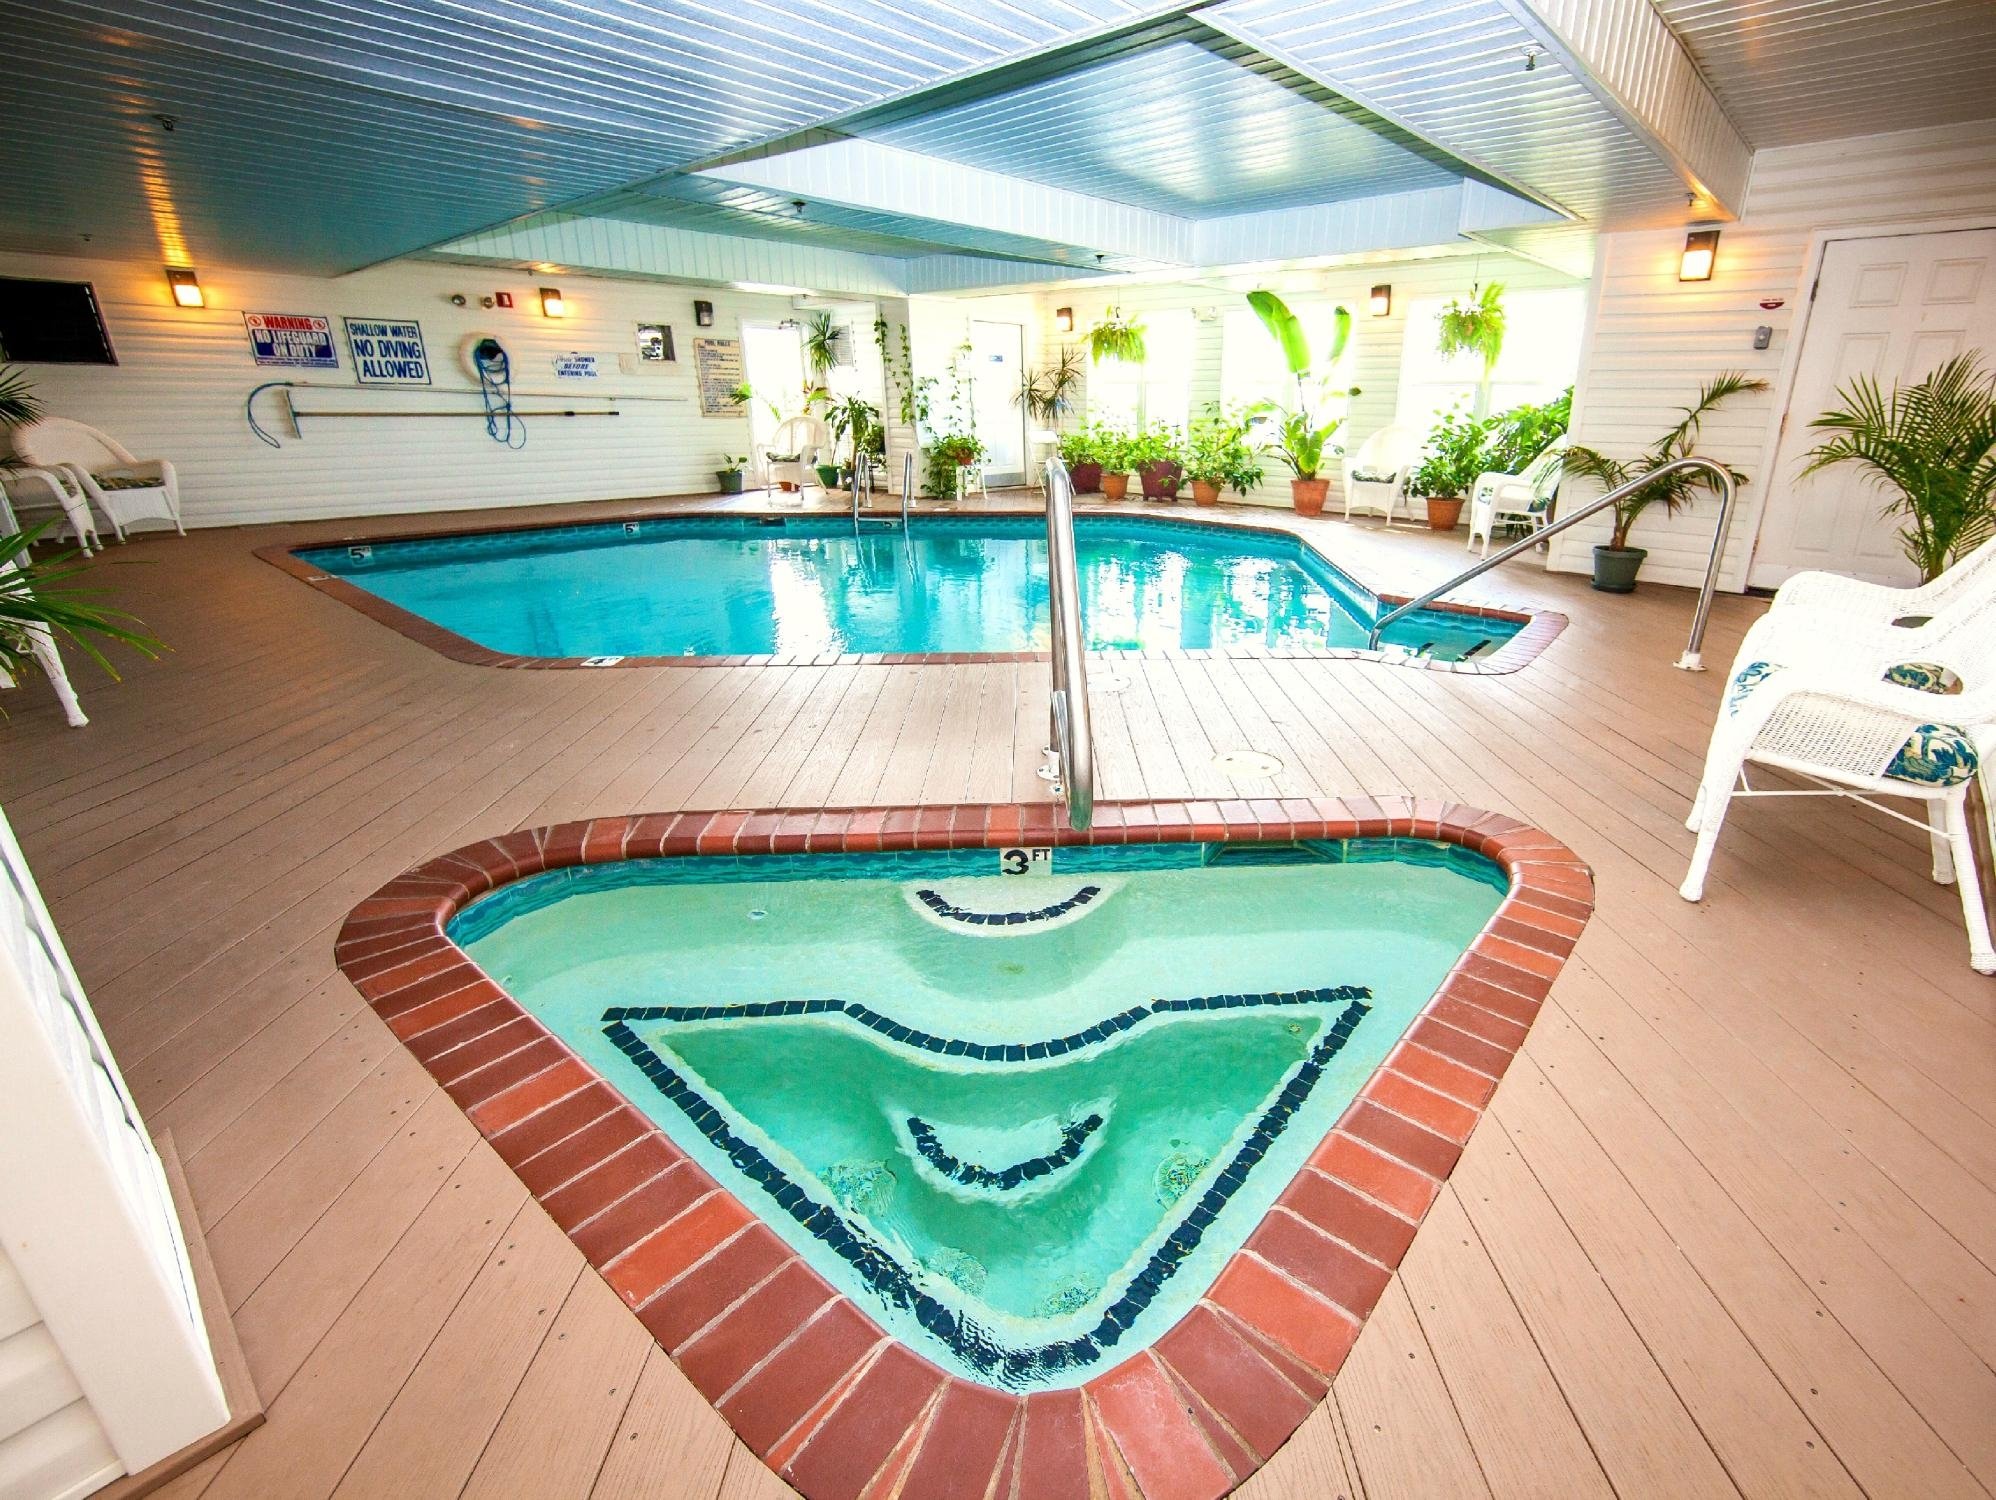 The Islander Inn Indoor Pool Hot Tub Pic